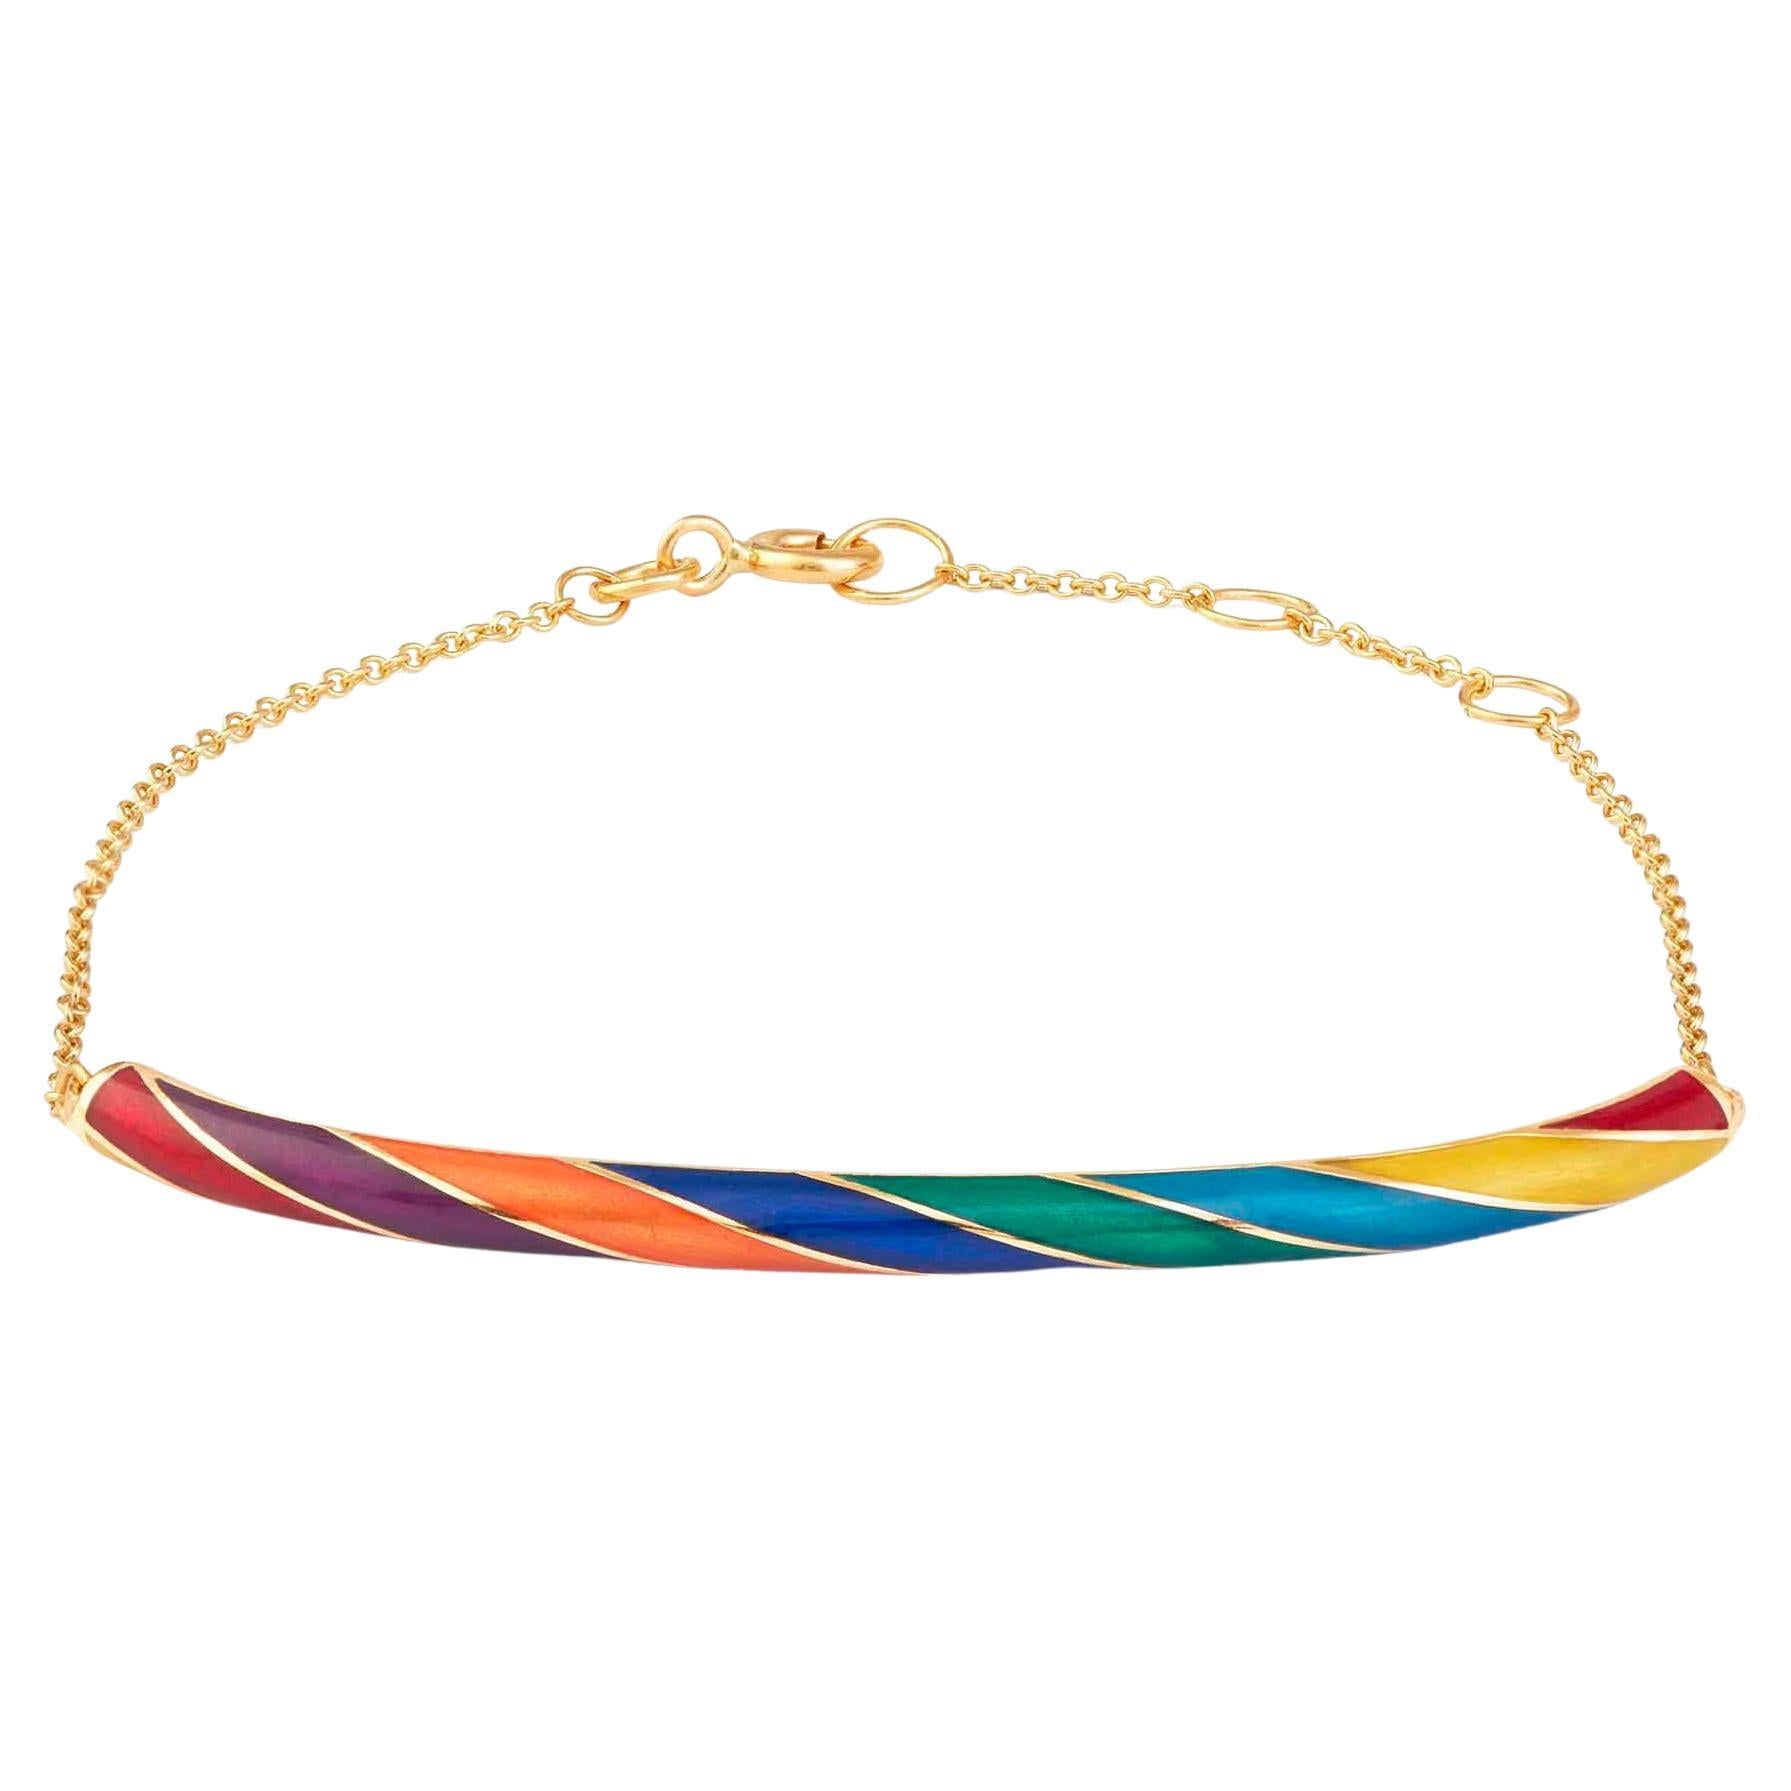 Bergahorn Candy Regenbogen-Armband